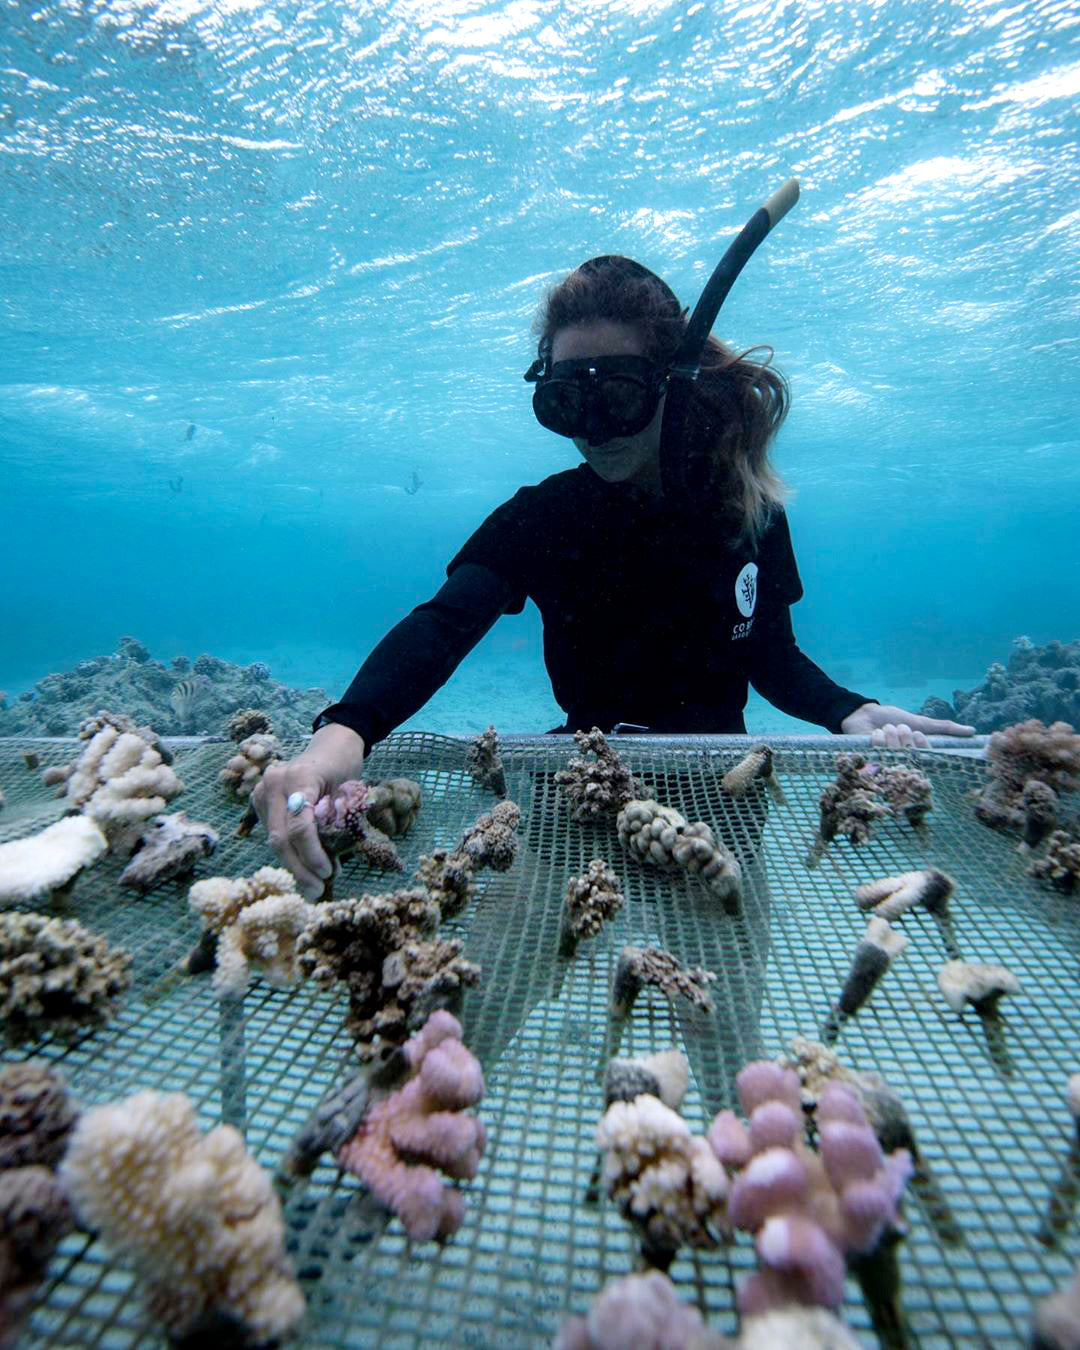 Coral Reef Restoration